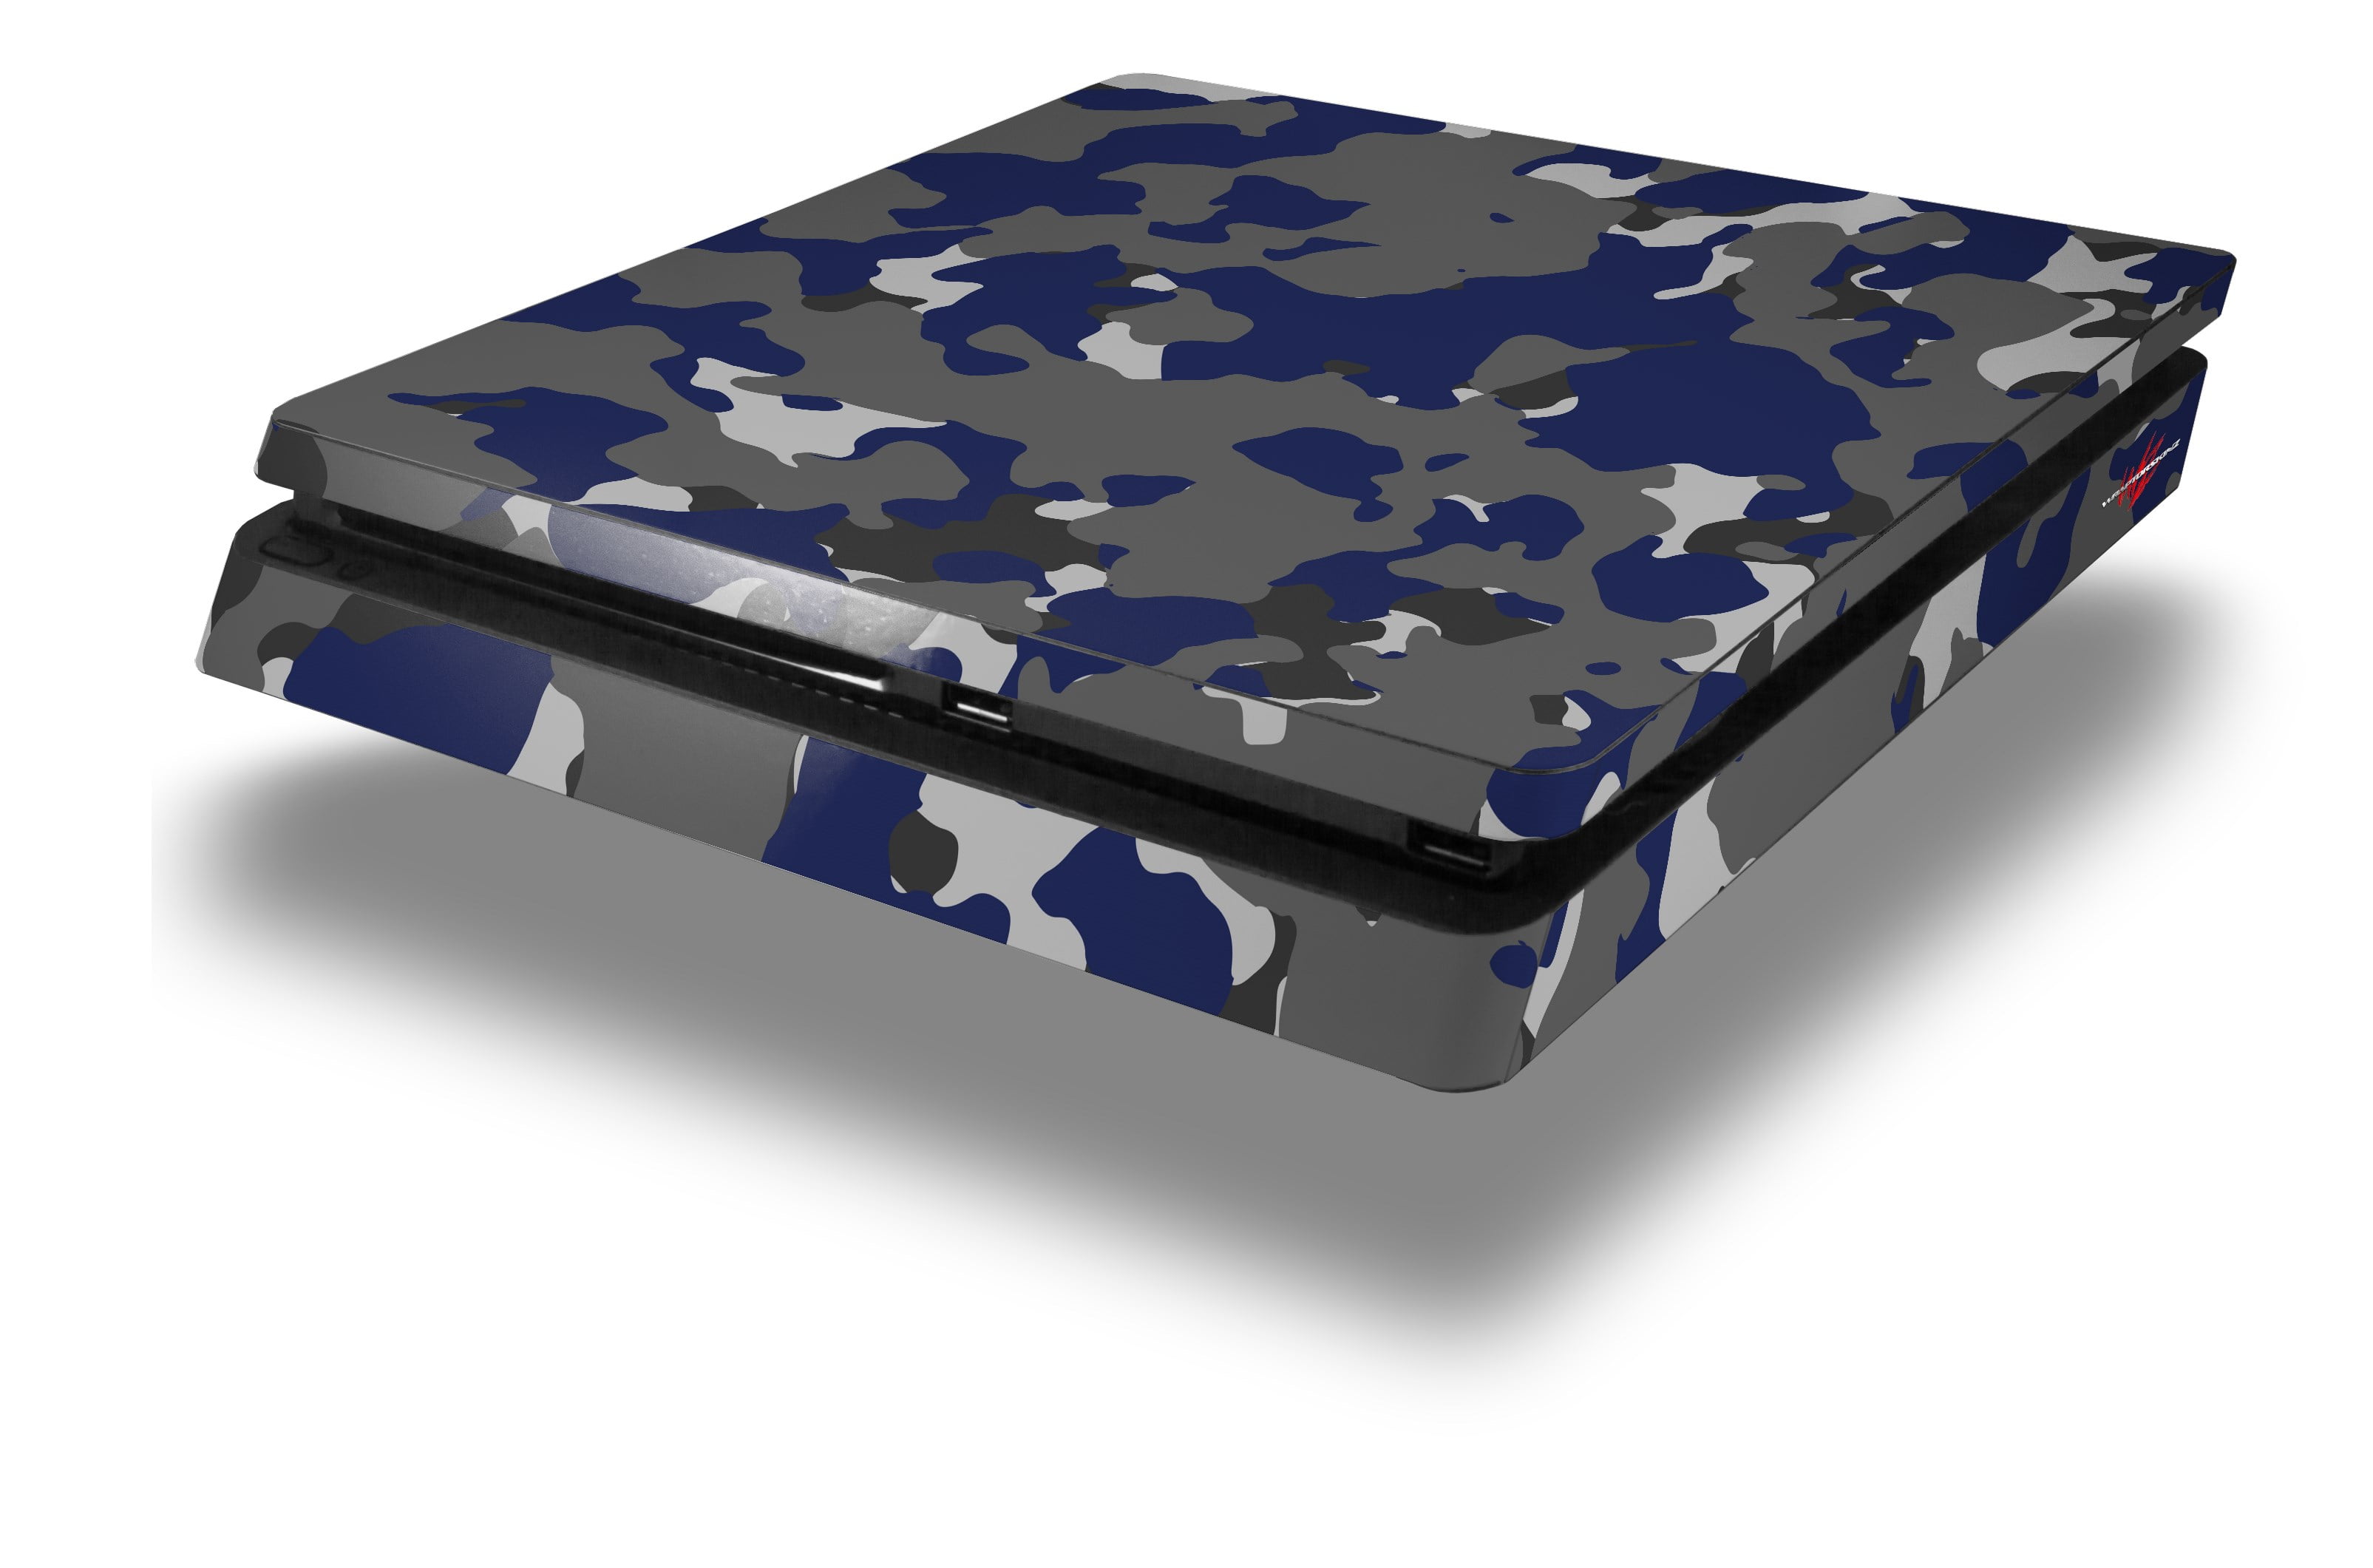 Cover/ Wrap for Playstation 4 Slim Playstation 4 Slim PS4 Slim Skin Blue Patterned Tiles Console Skin